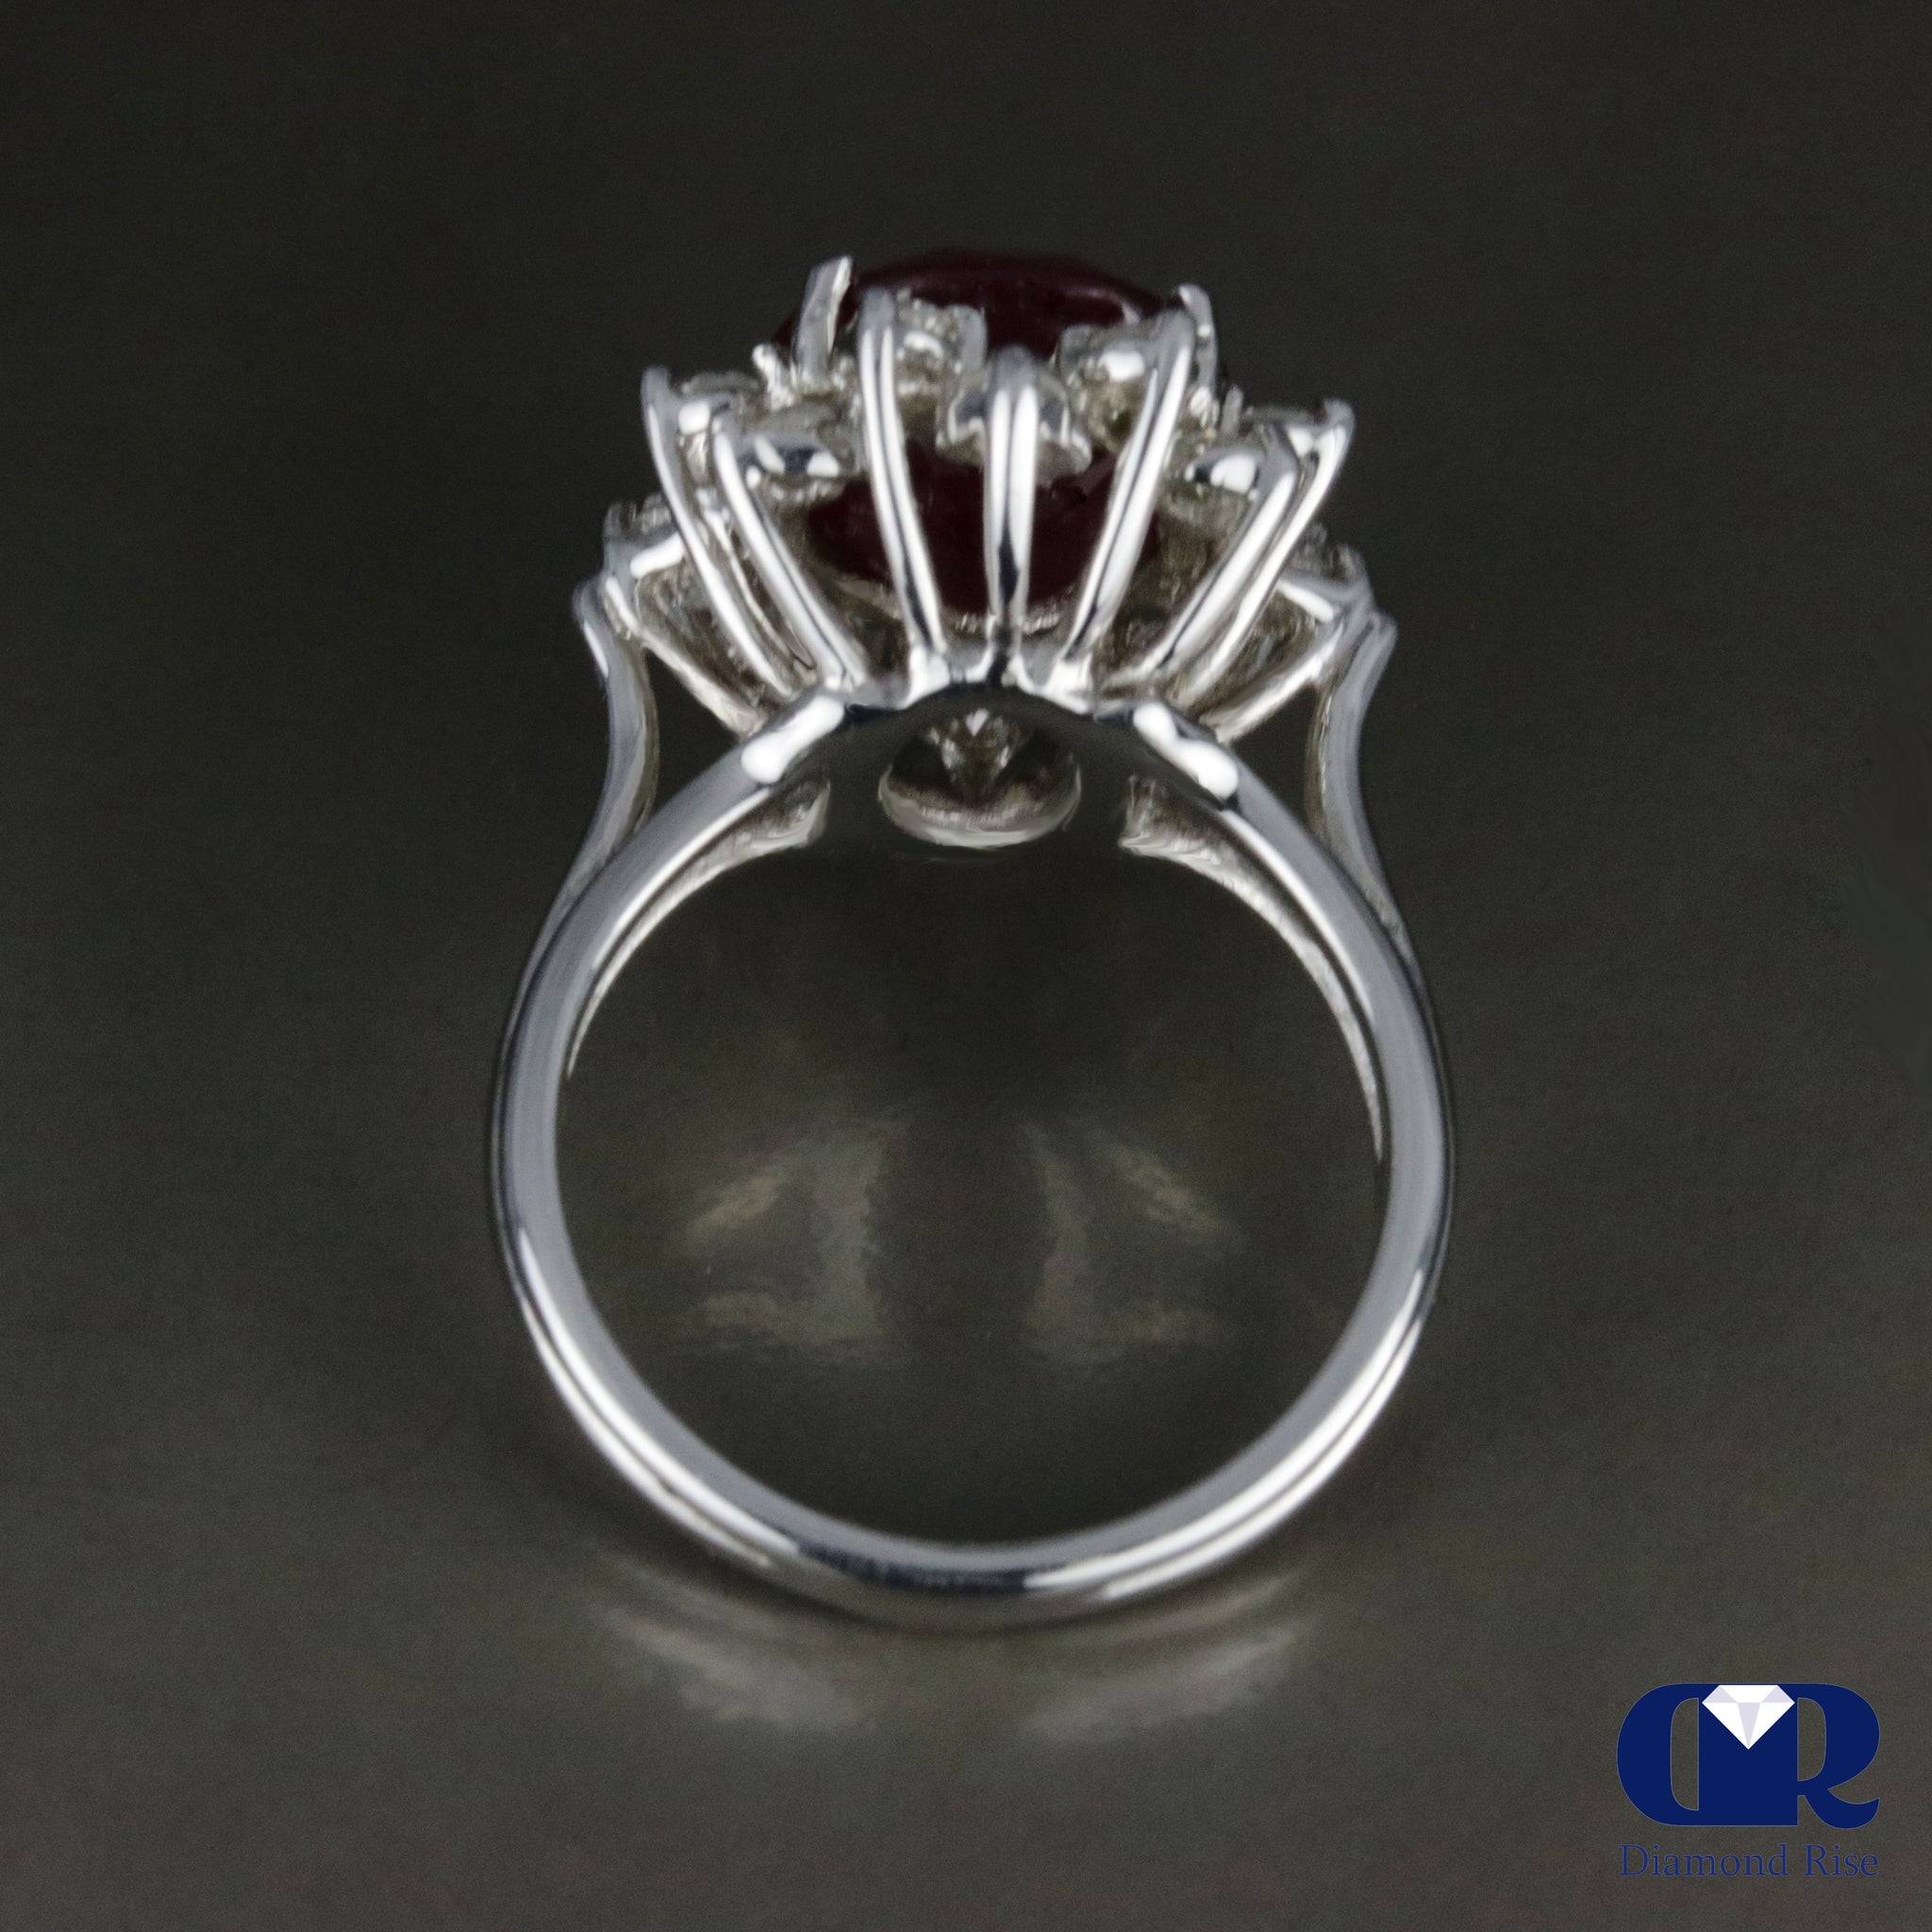 1/2 CT. T.W. Multi-Row Right-Hand Diamond Ring in 14K White Gold | Zales